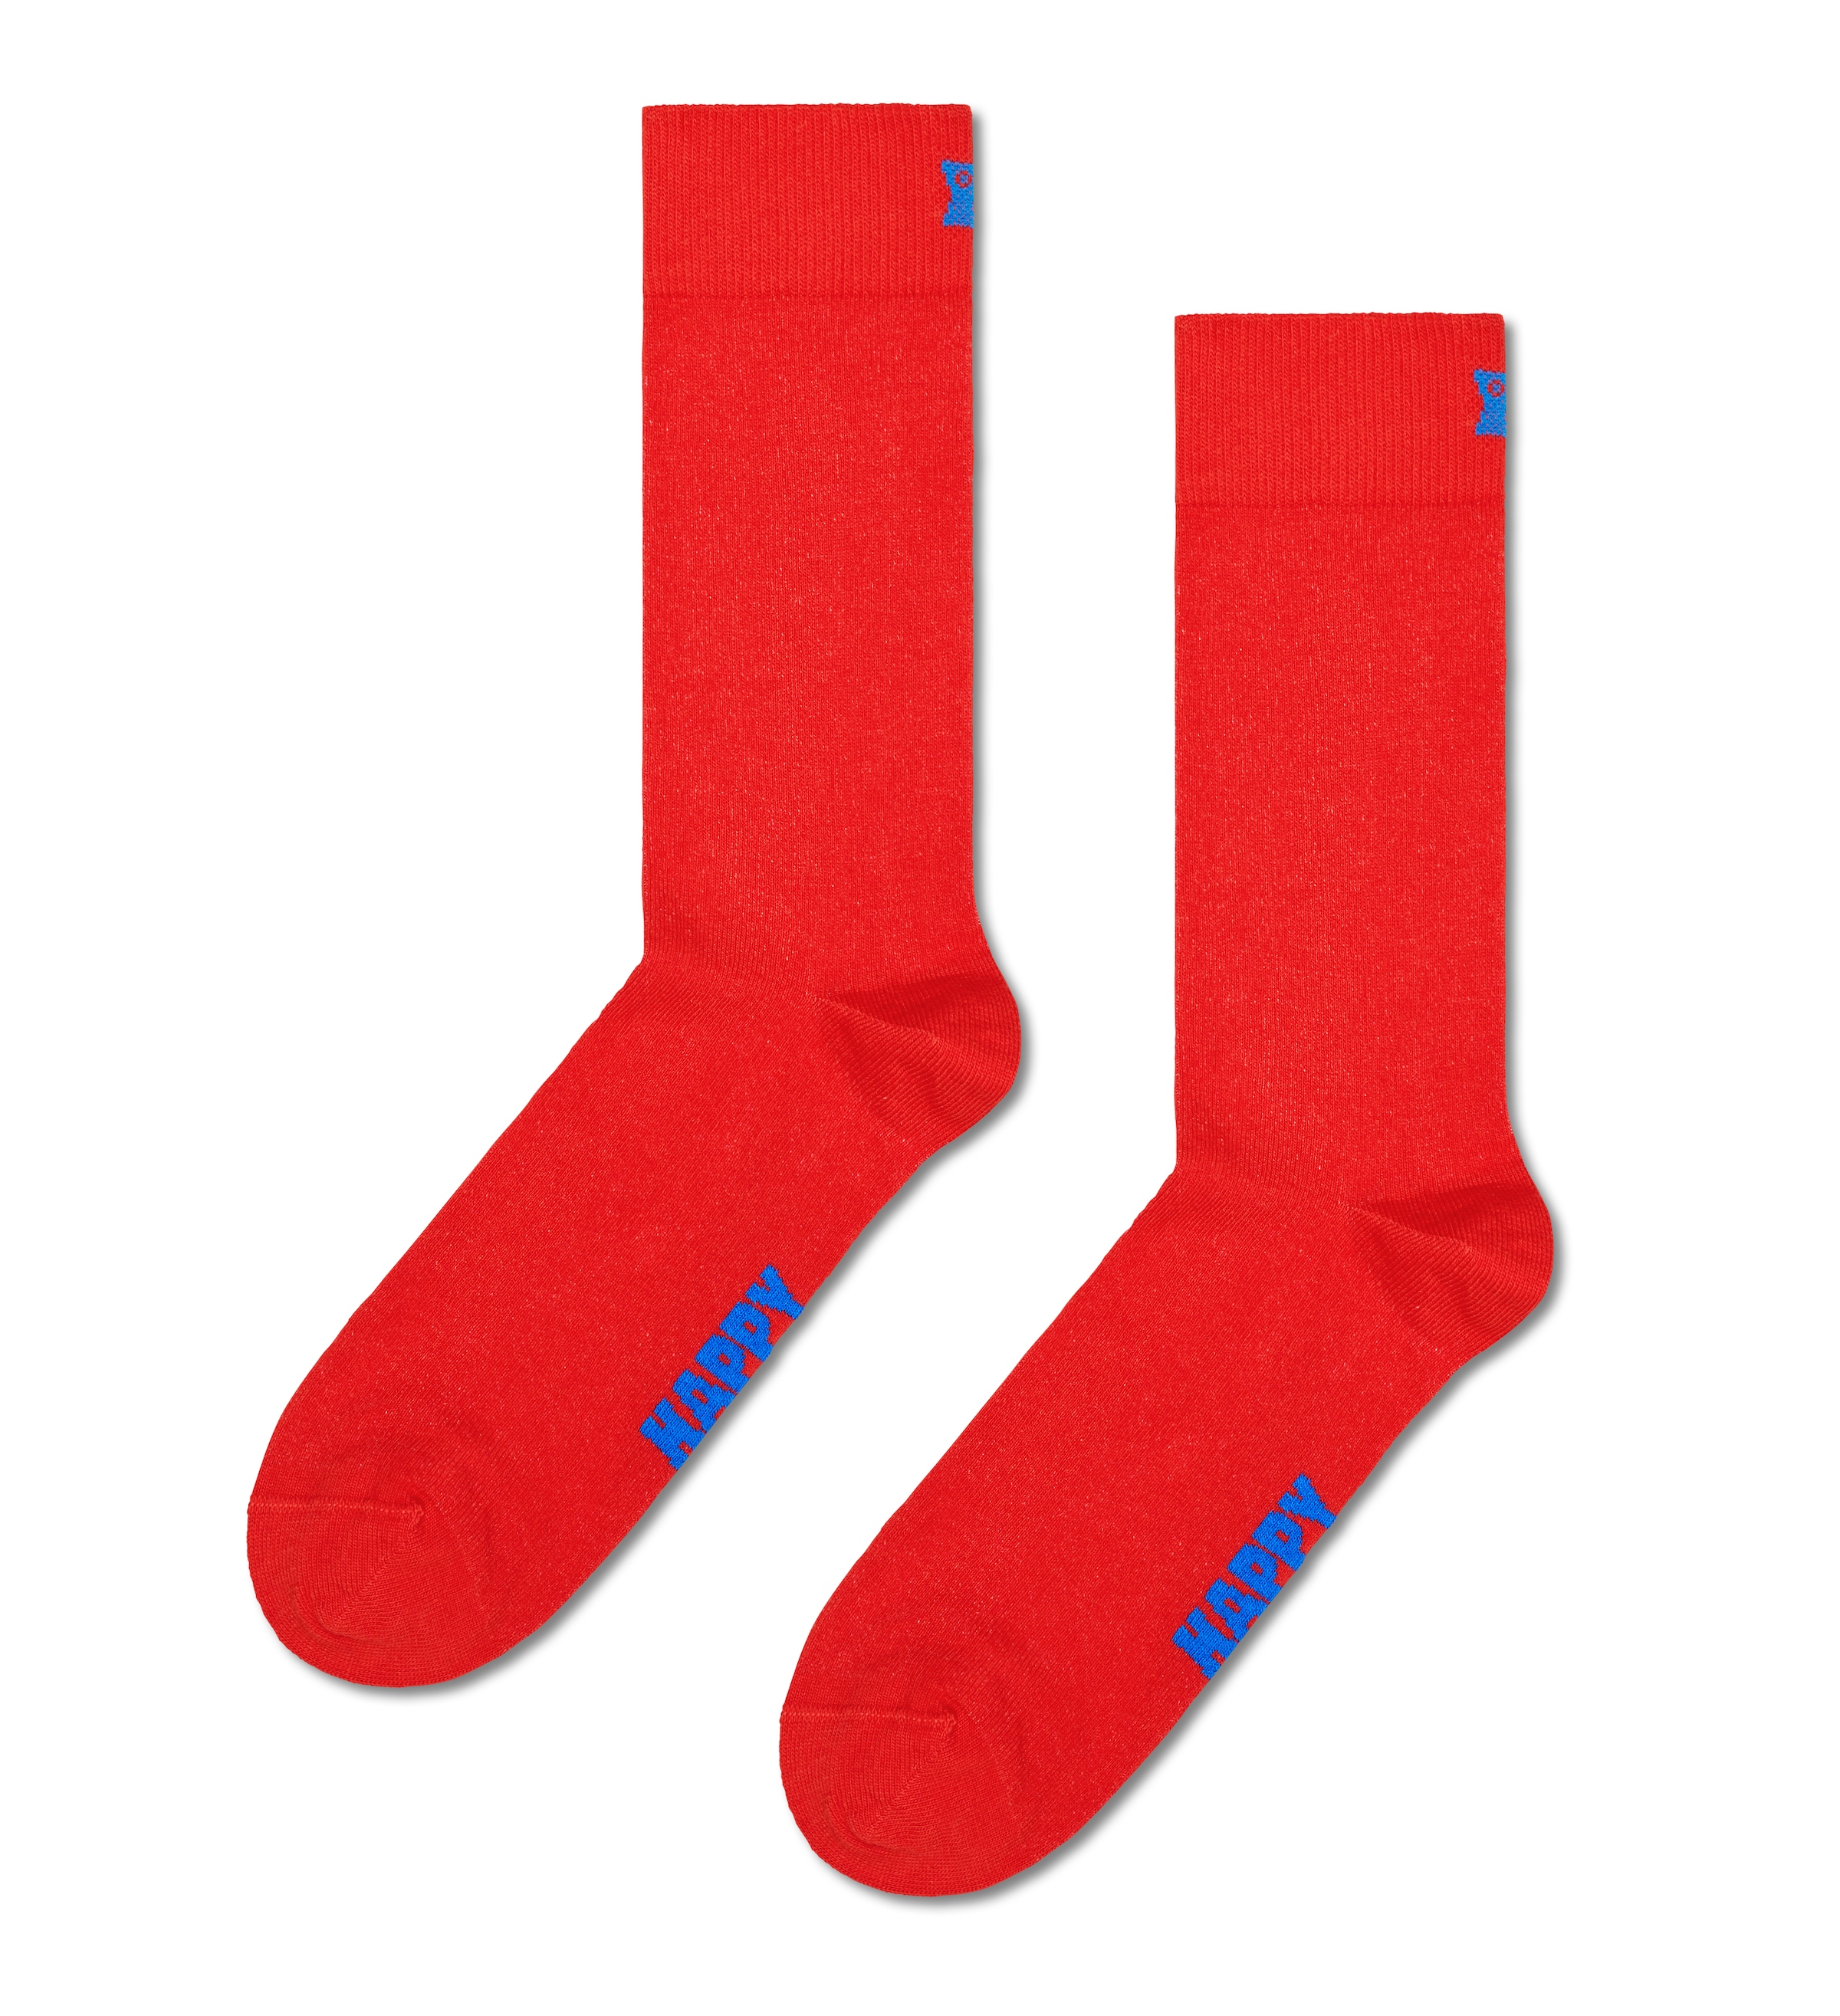 Happy Socks Socken, (Set, 5 Paar), mit verspielten Farben